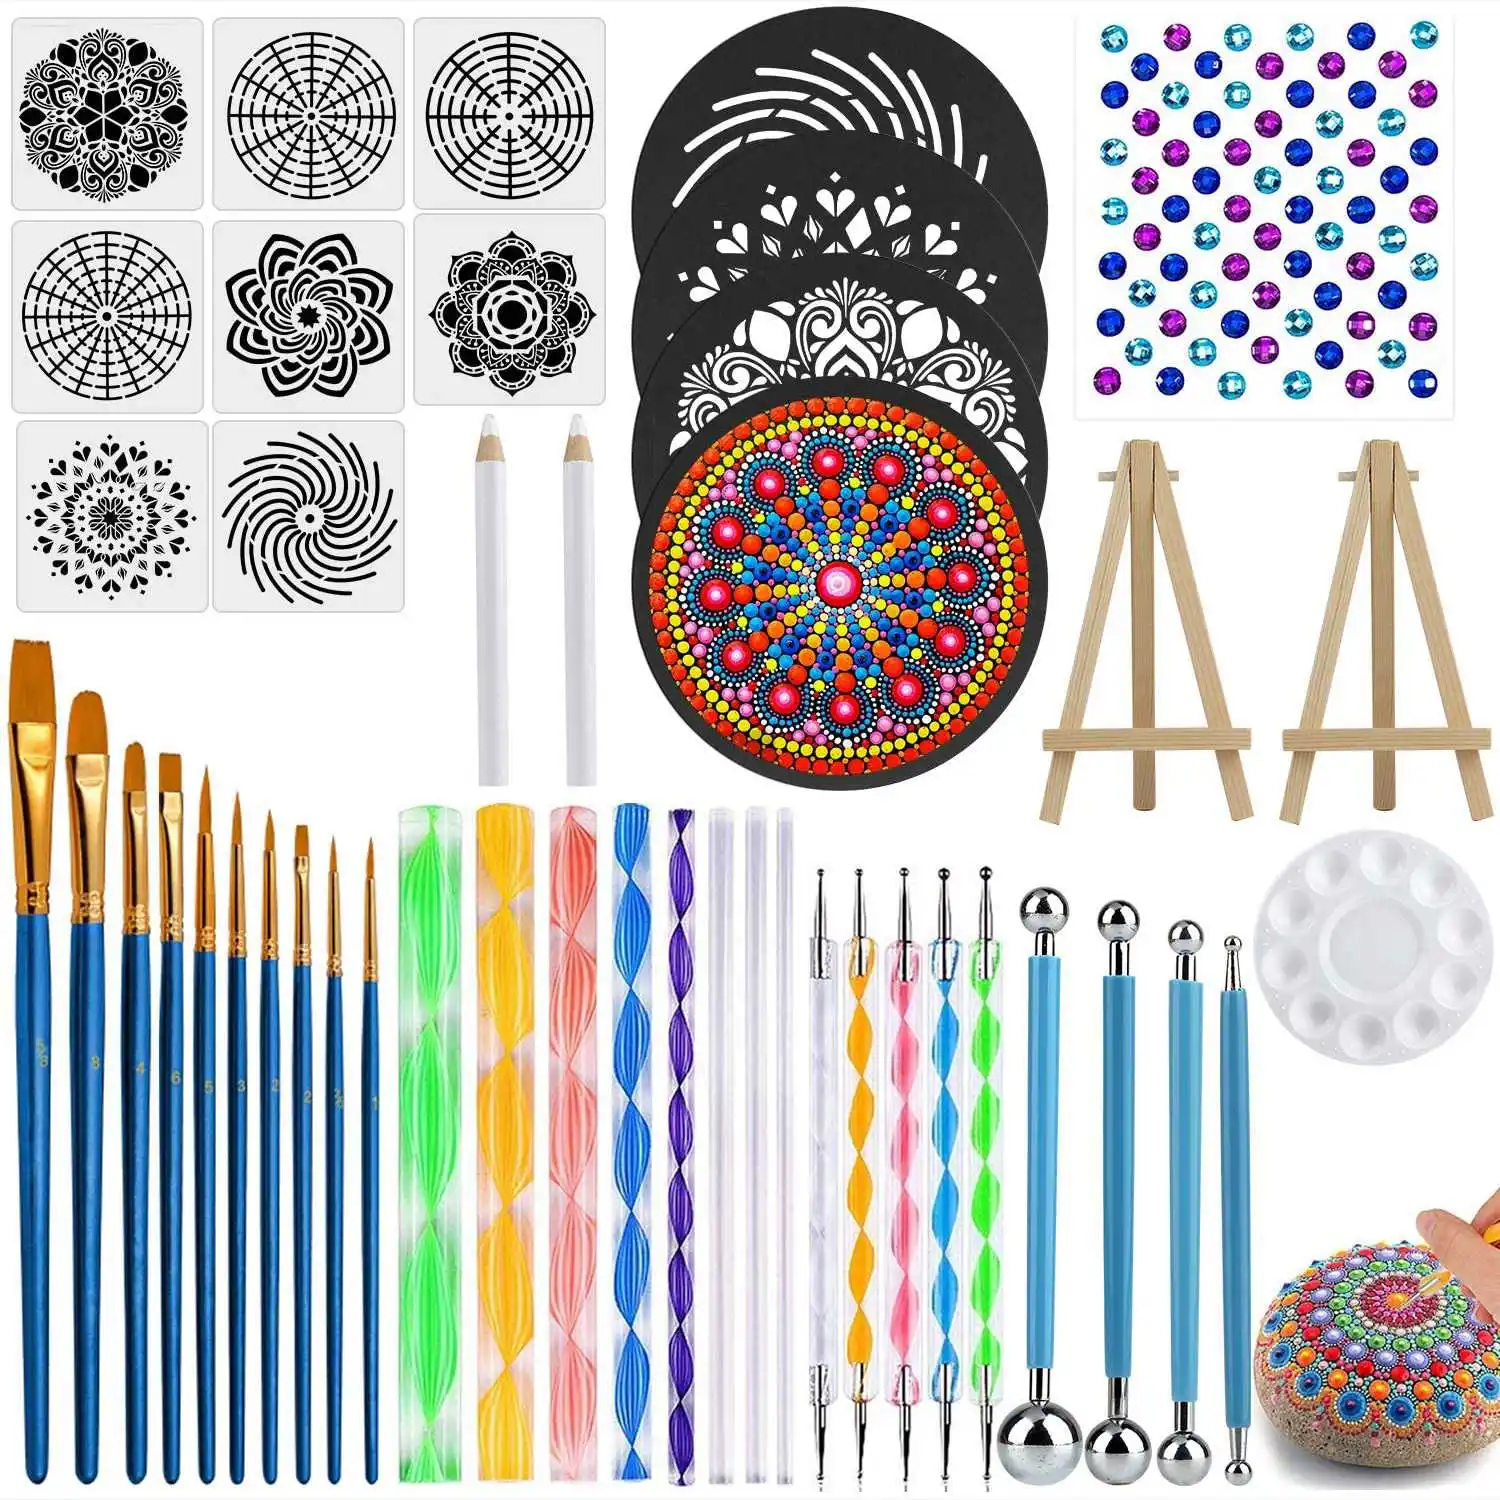 45 PCS Mandala Dotting Tools Set, Stencil Painting Arts Supplies Tools Kits Including Stencil Templates, Mini Easel